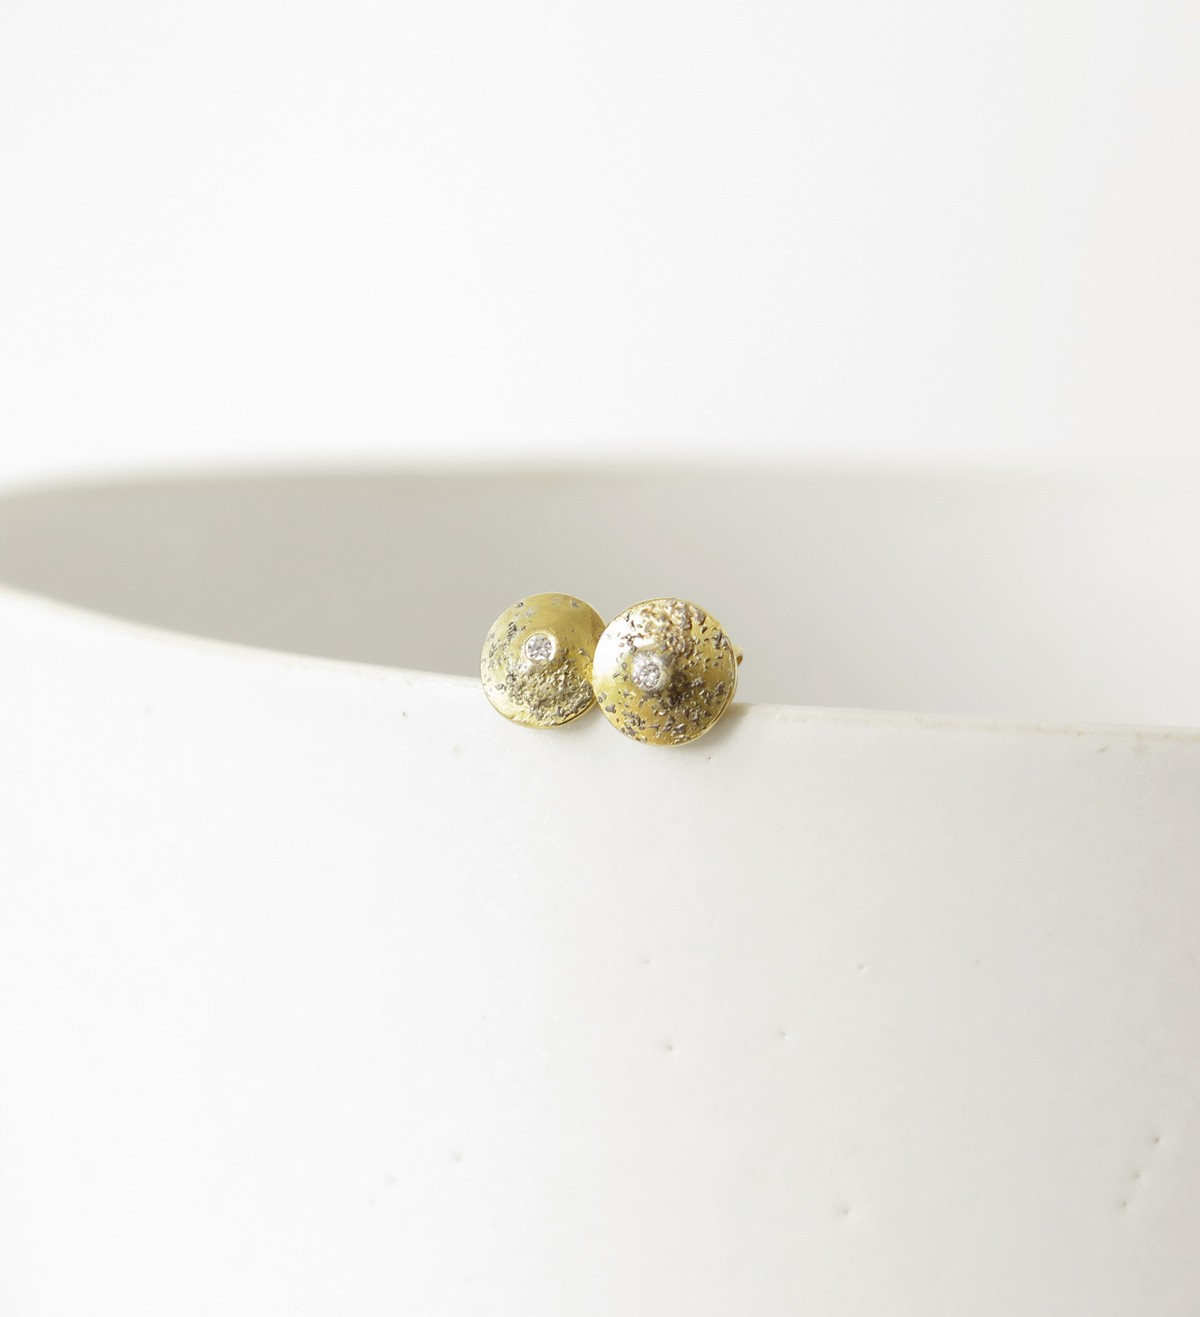 18k gold, paladium and diamonds earrings Bosc 8mm